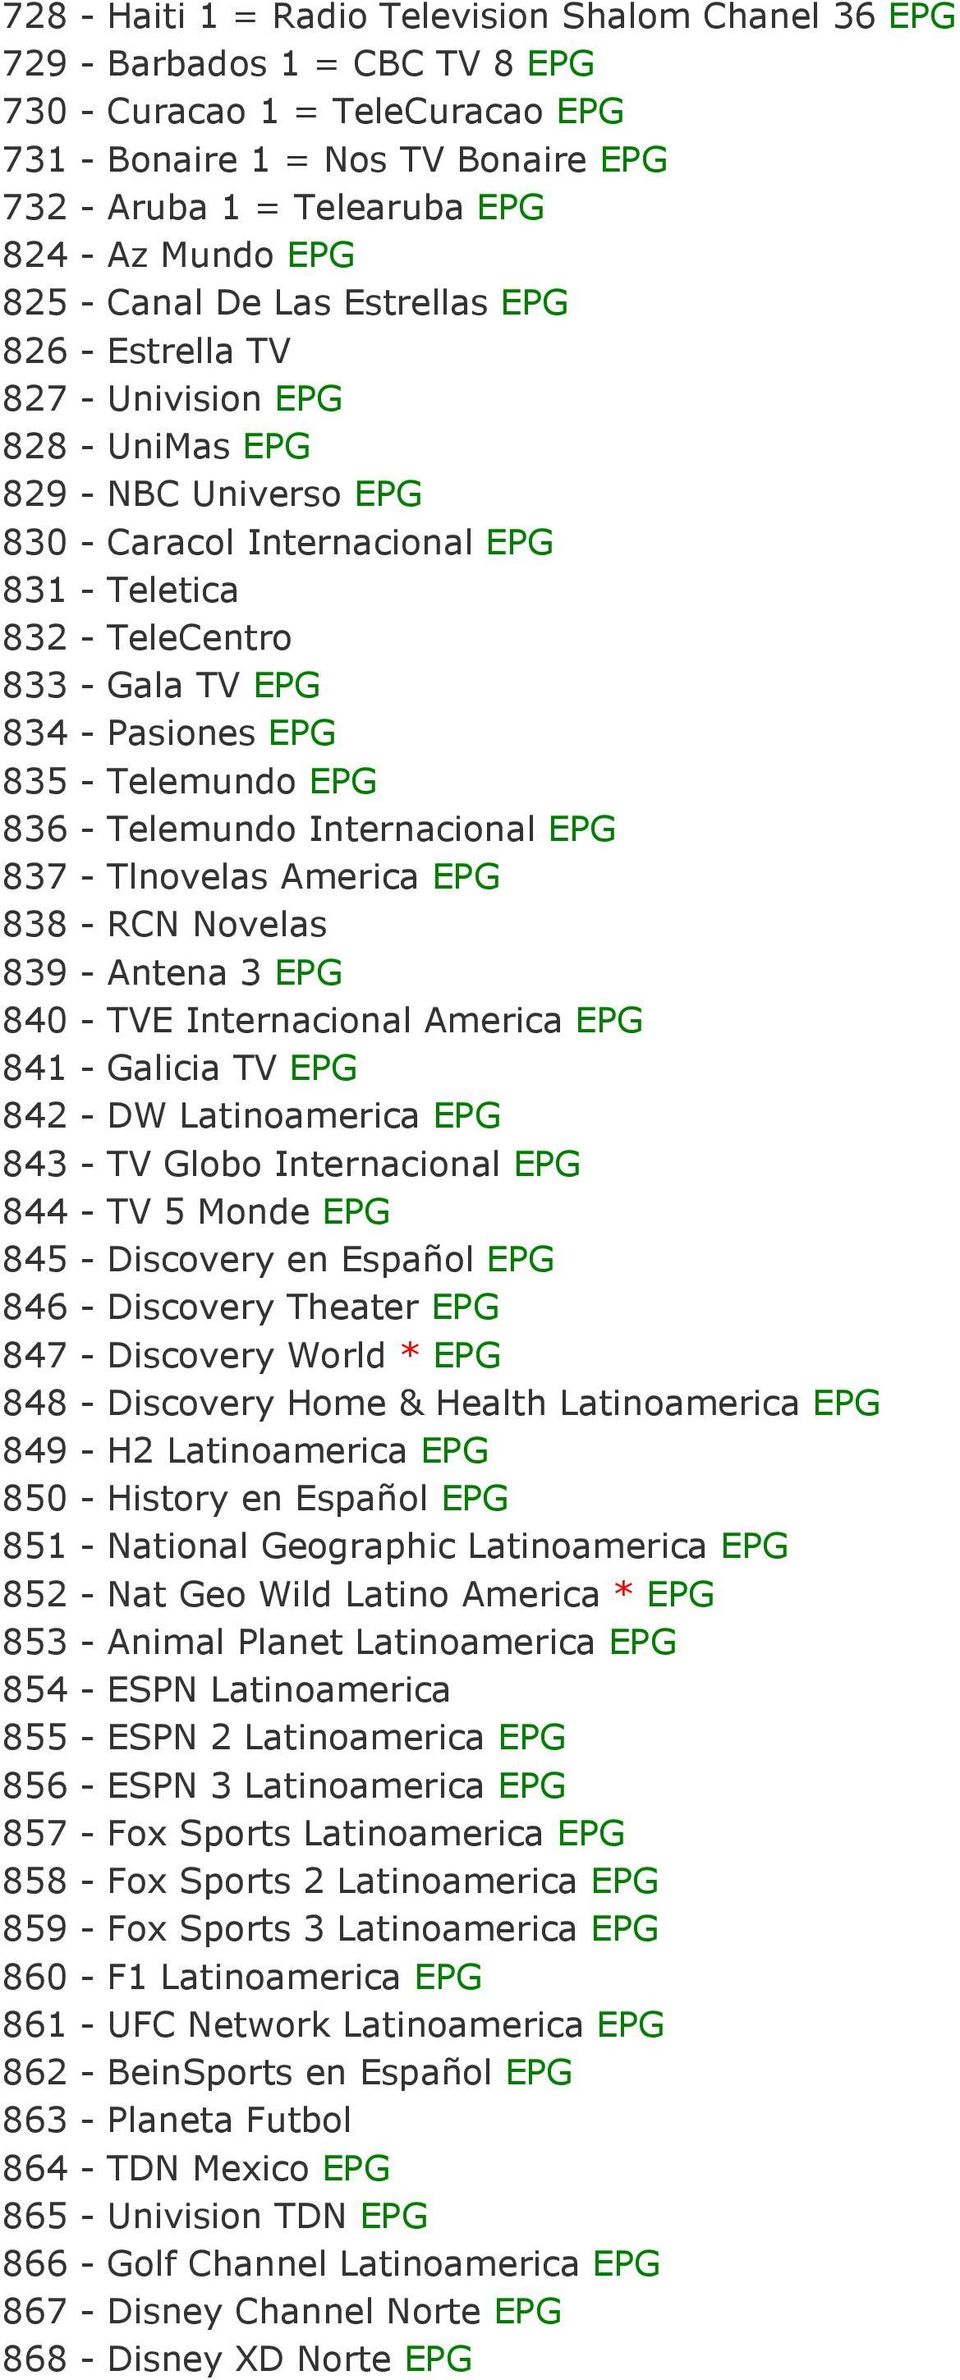 EPG 834 - Pasiones EPG 835 - Telemundo EPG 836 - Telemundo Internacional EPG 837 - Tlnovelas America EPG 838 - RCN Novelas 839 - Antena 3 EPG 840 - TVE Internacional America EPG 841 - Galicia TV EPG